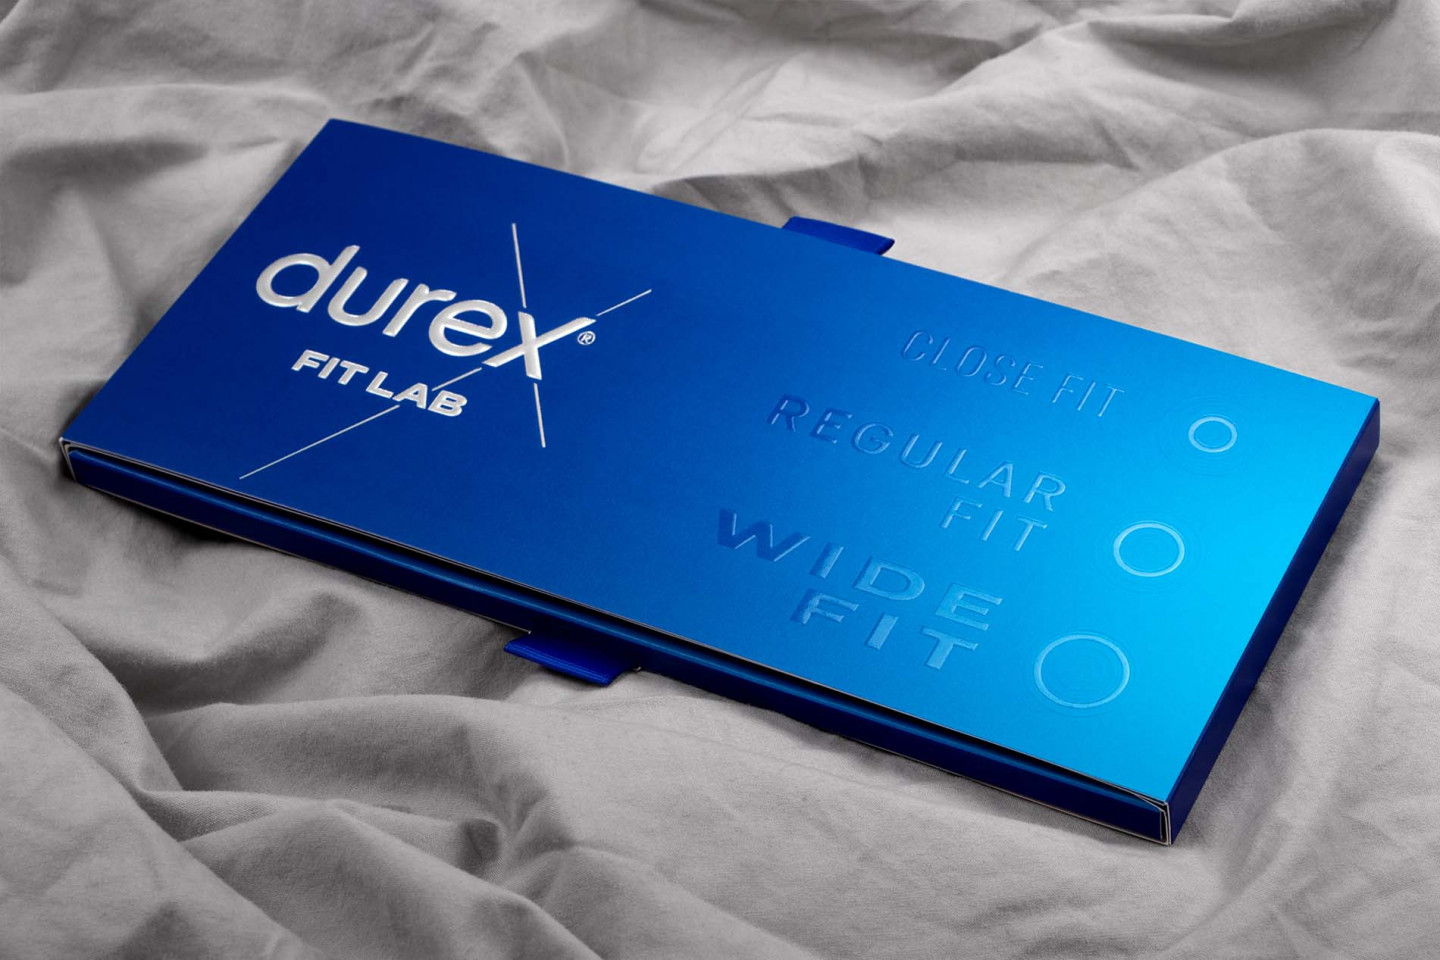 Durex - Fit Lab Trial Kit